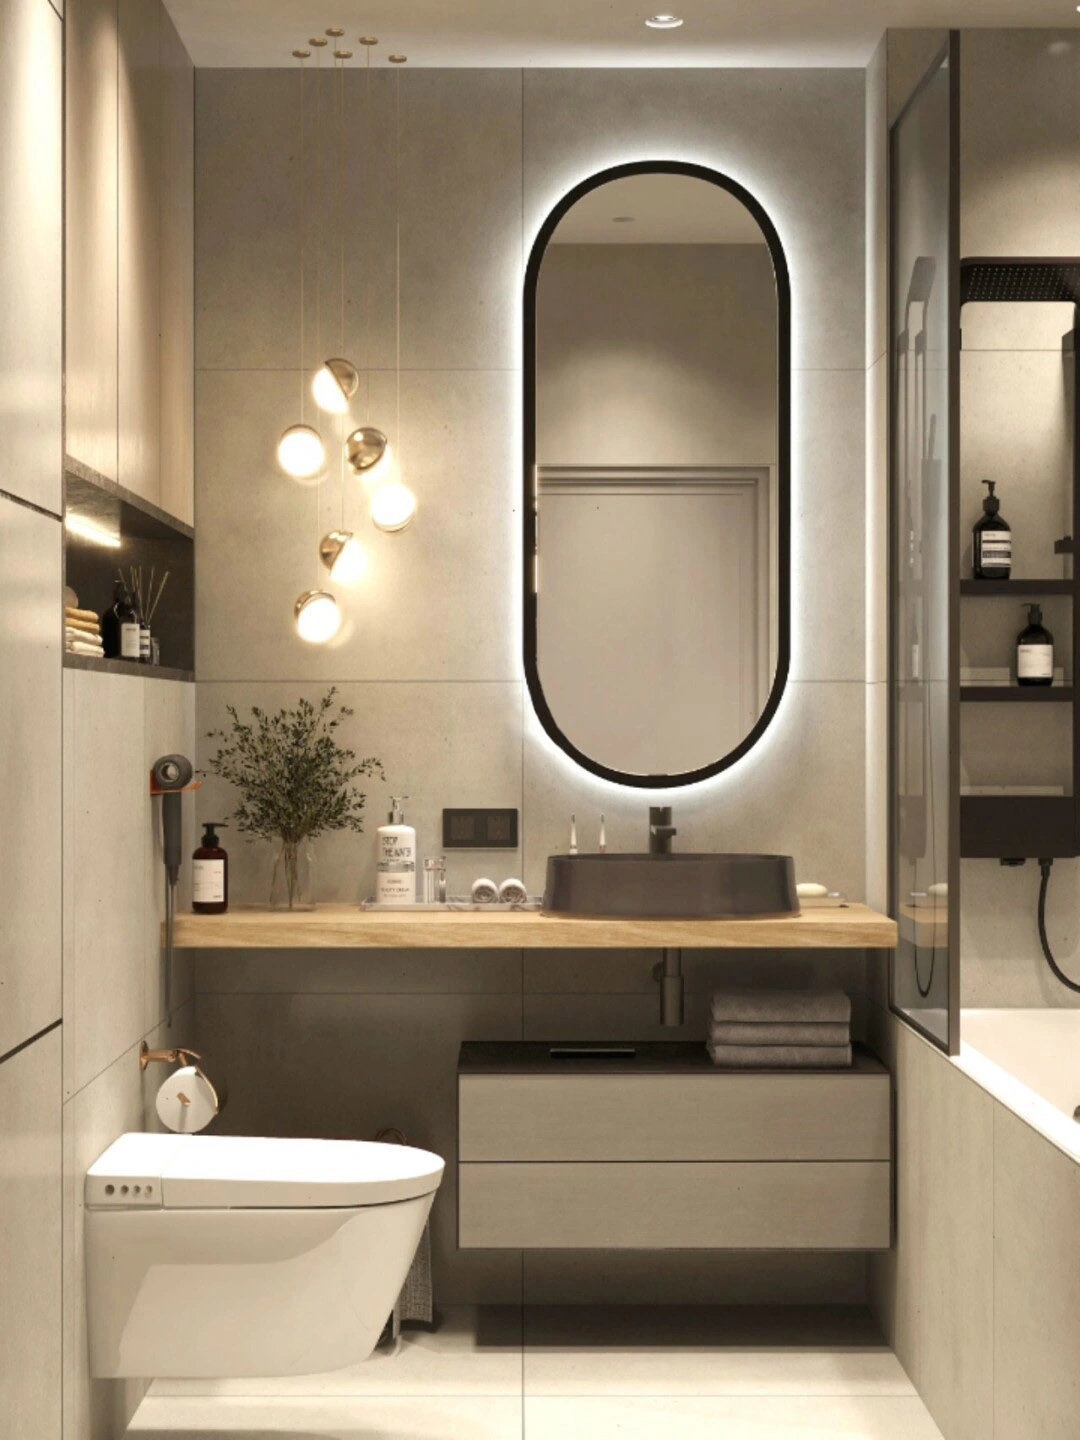 Dependiente Detener Tacto Modern Small Space Bathroom Designs | Bath Inspiration - TONA.com